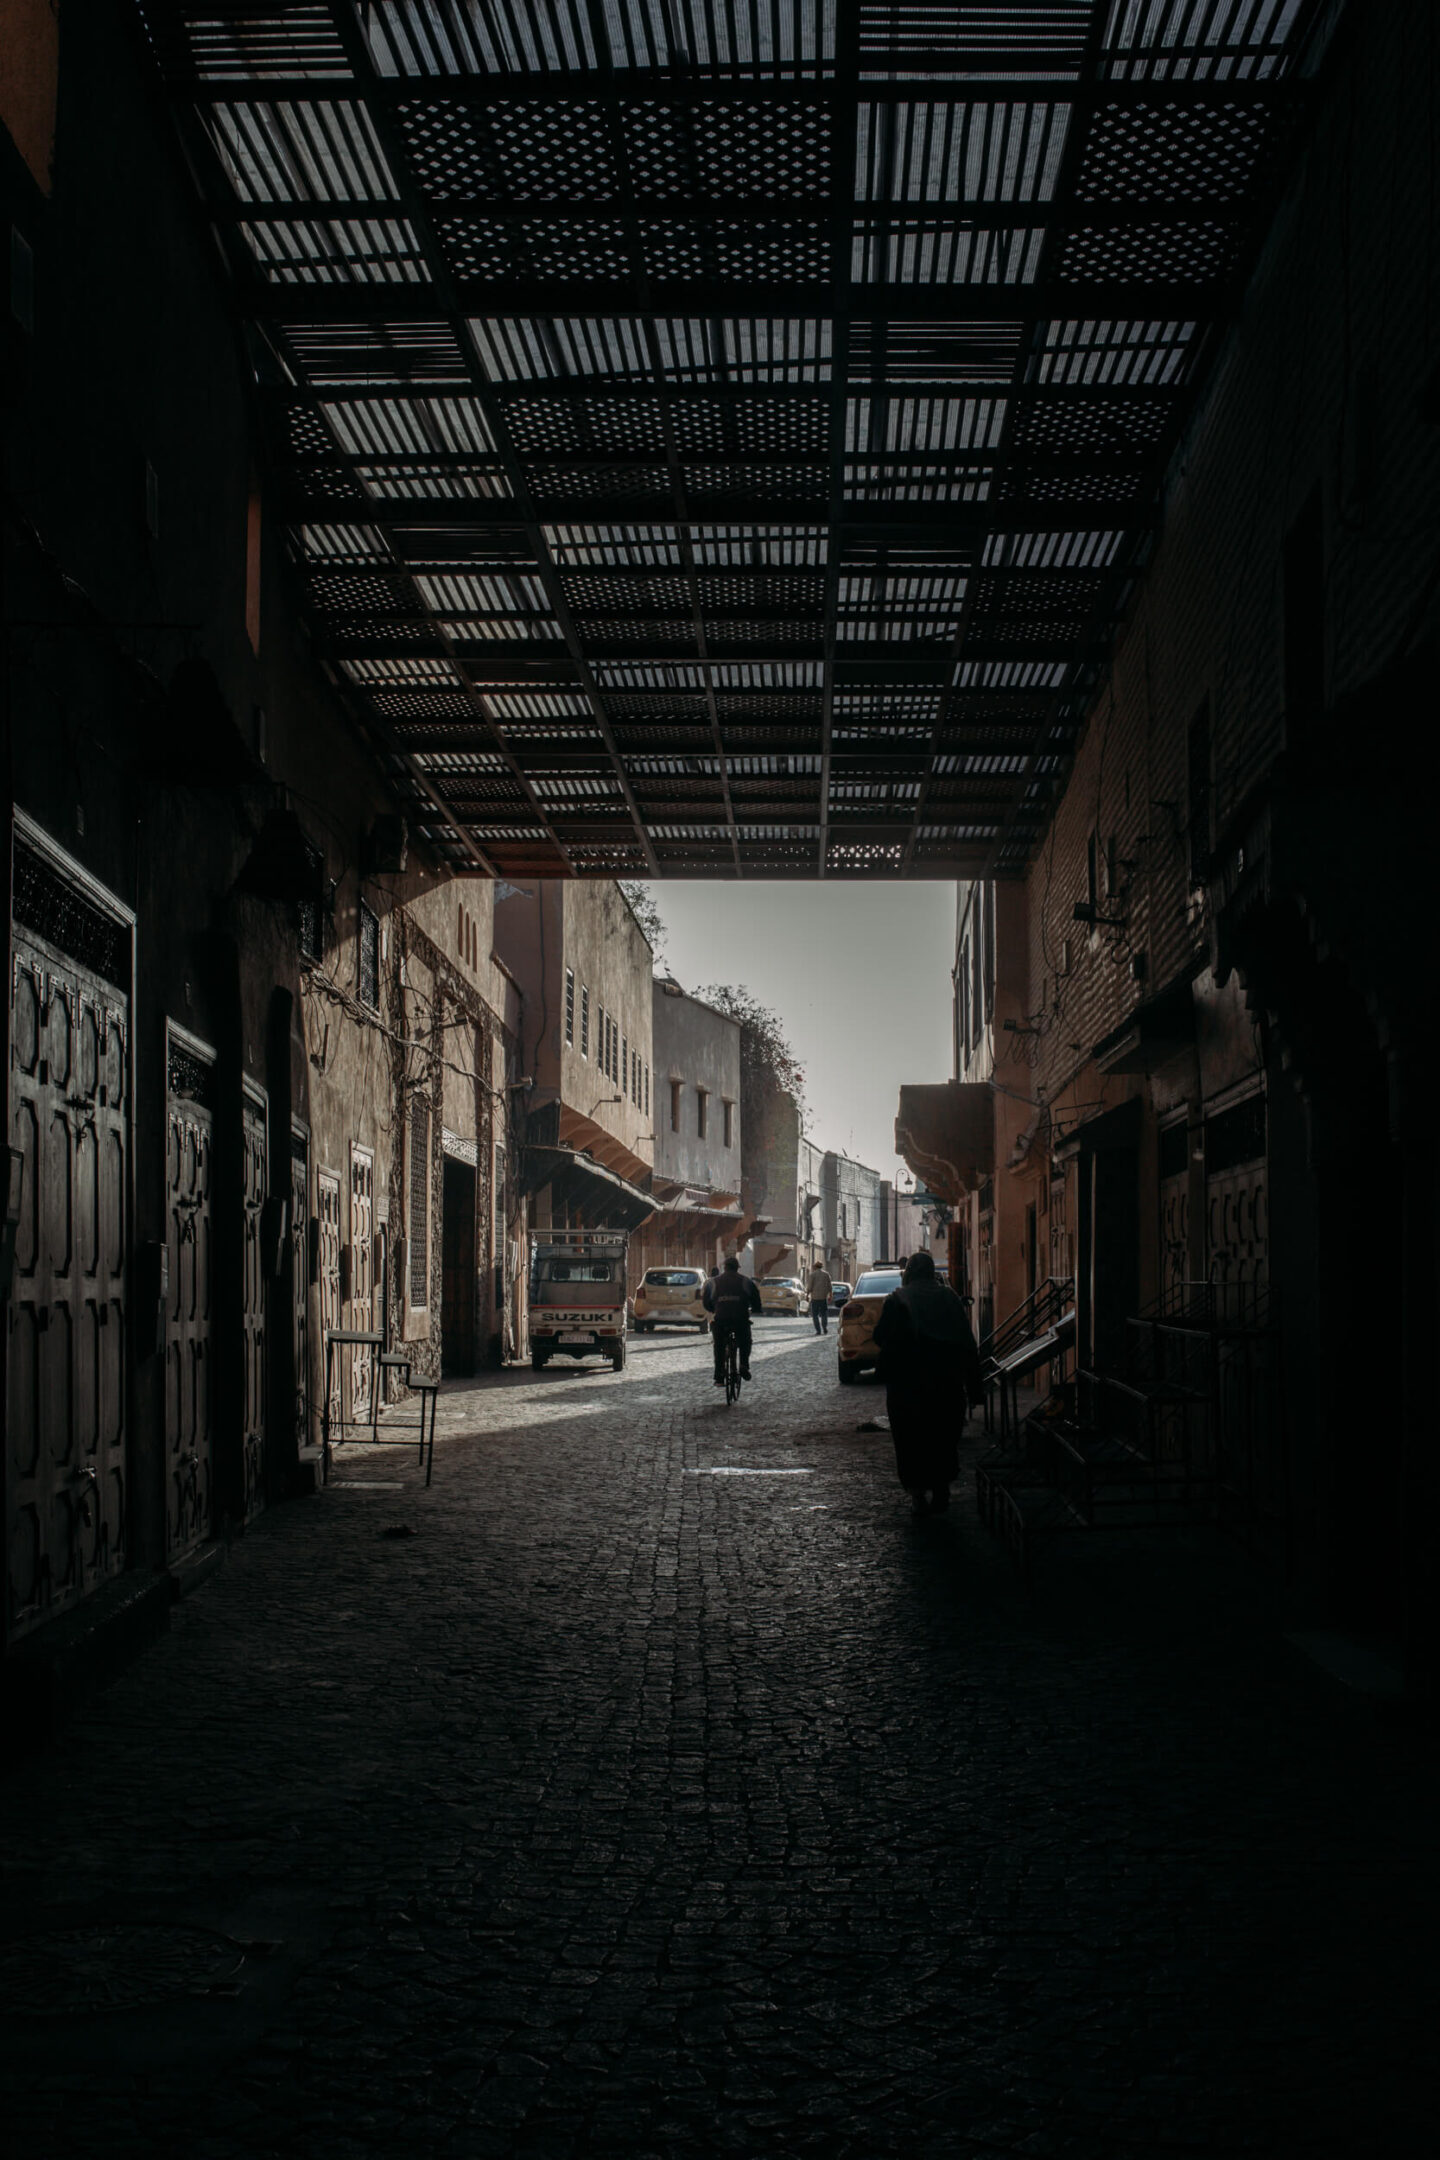 A street in the Medina, Marrakech 